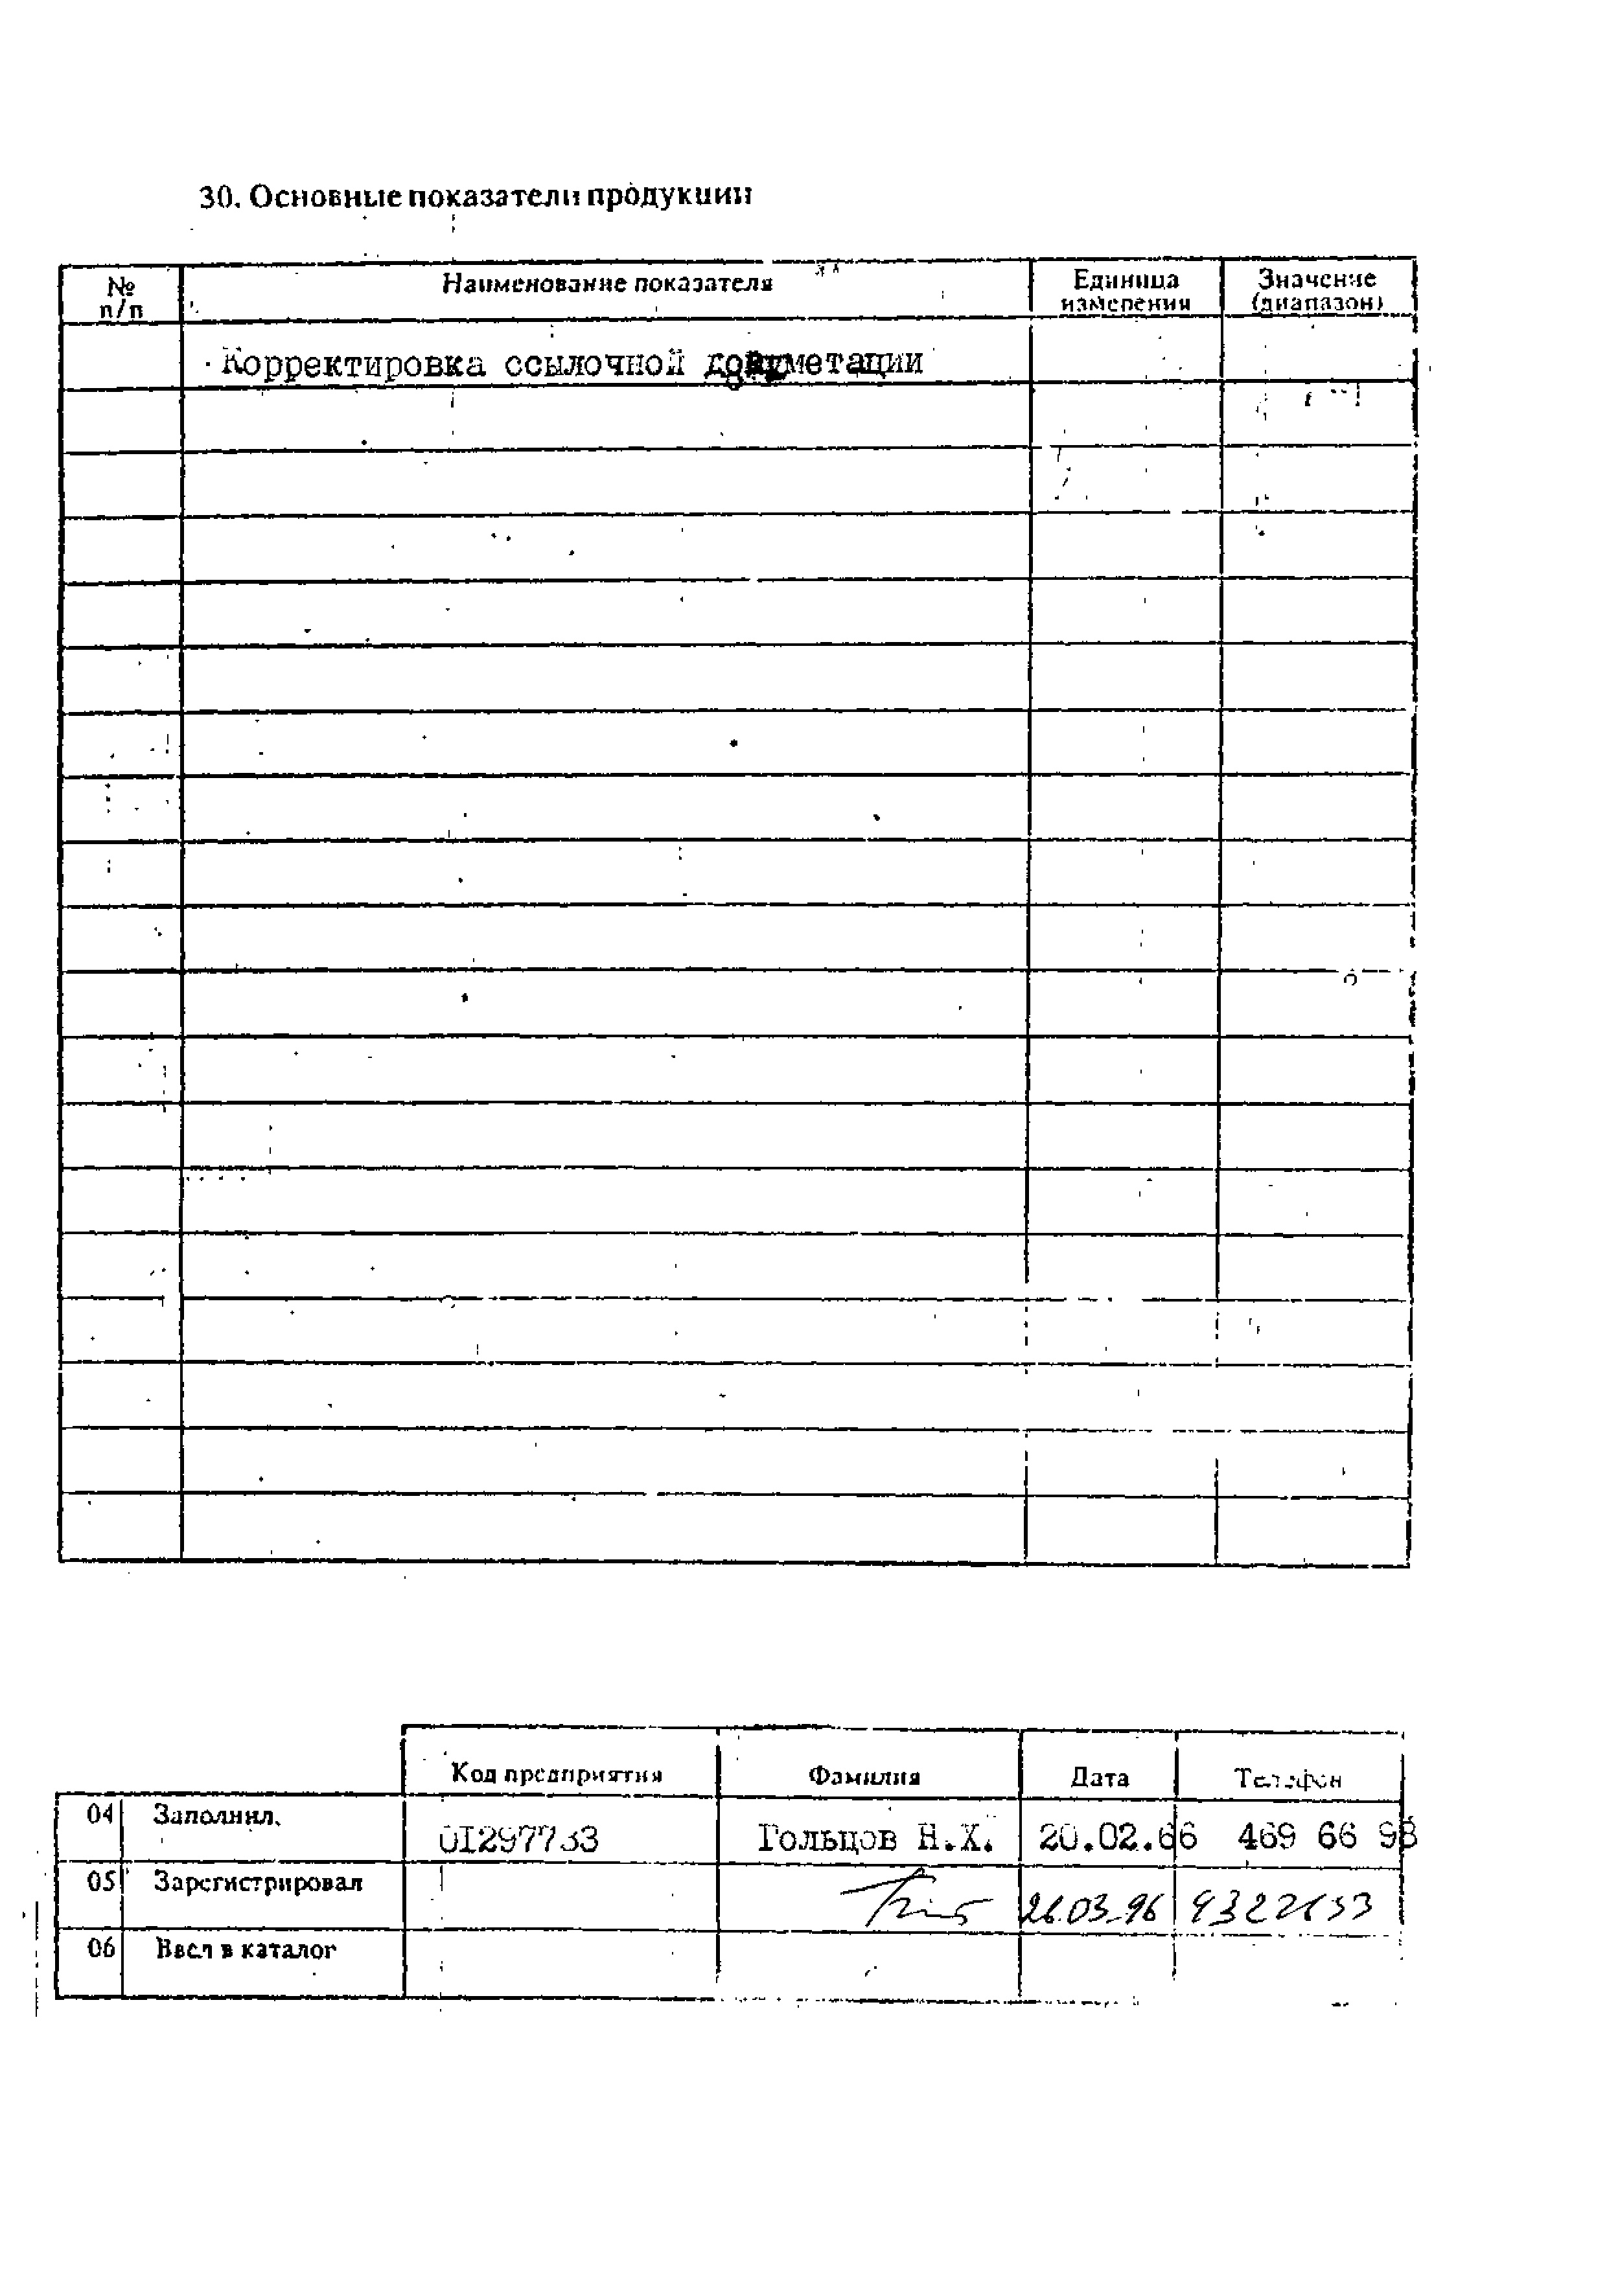 ТУ 102-360-85